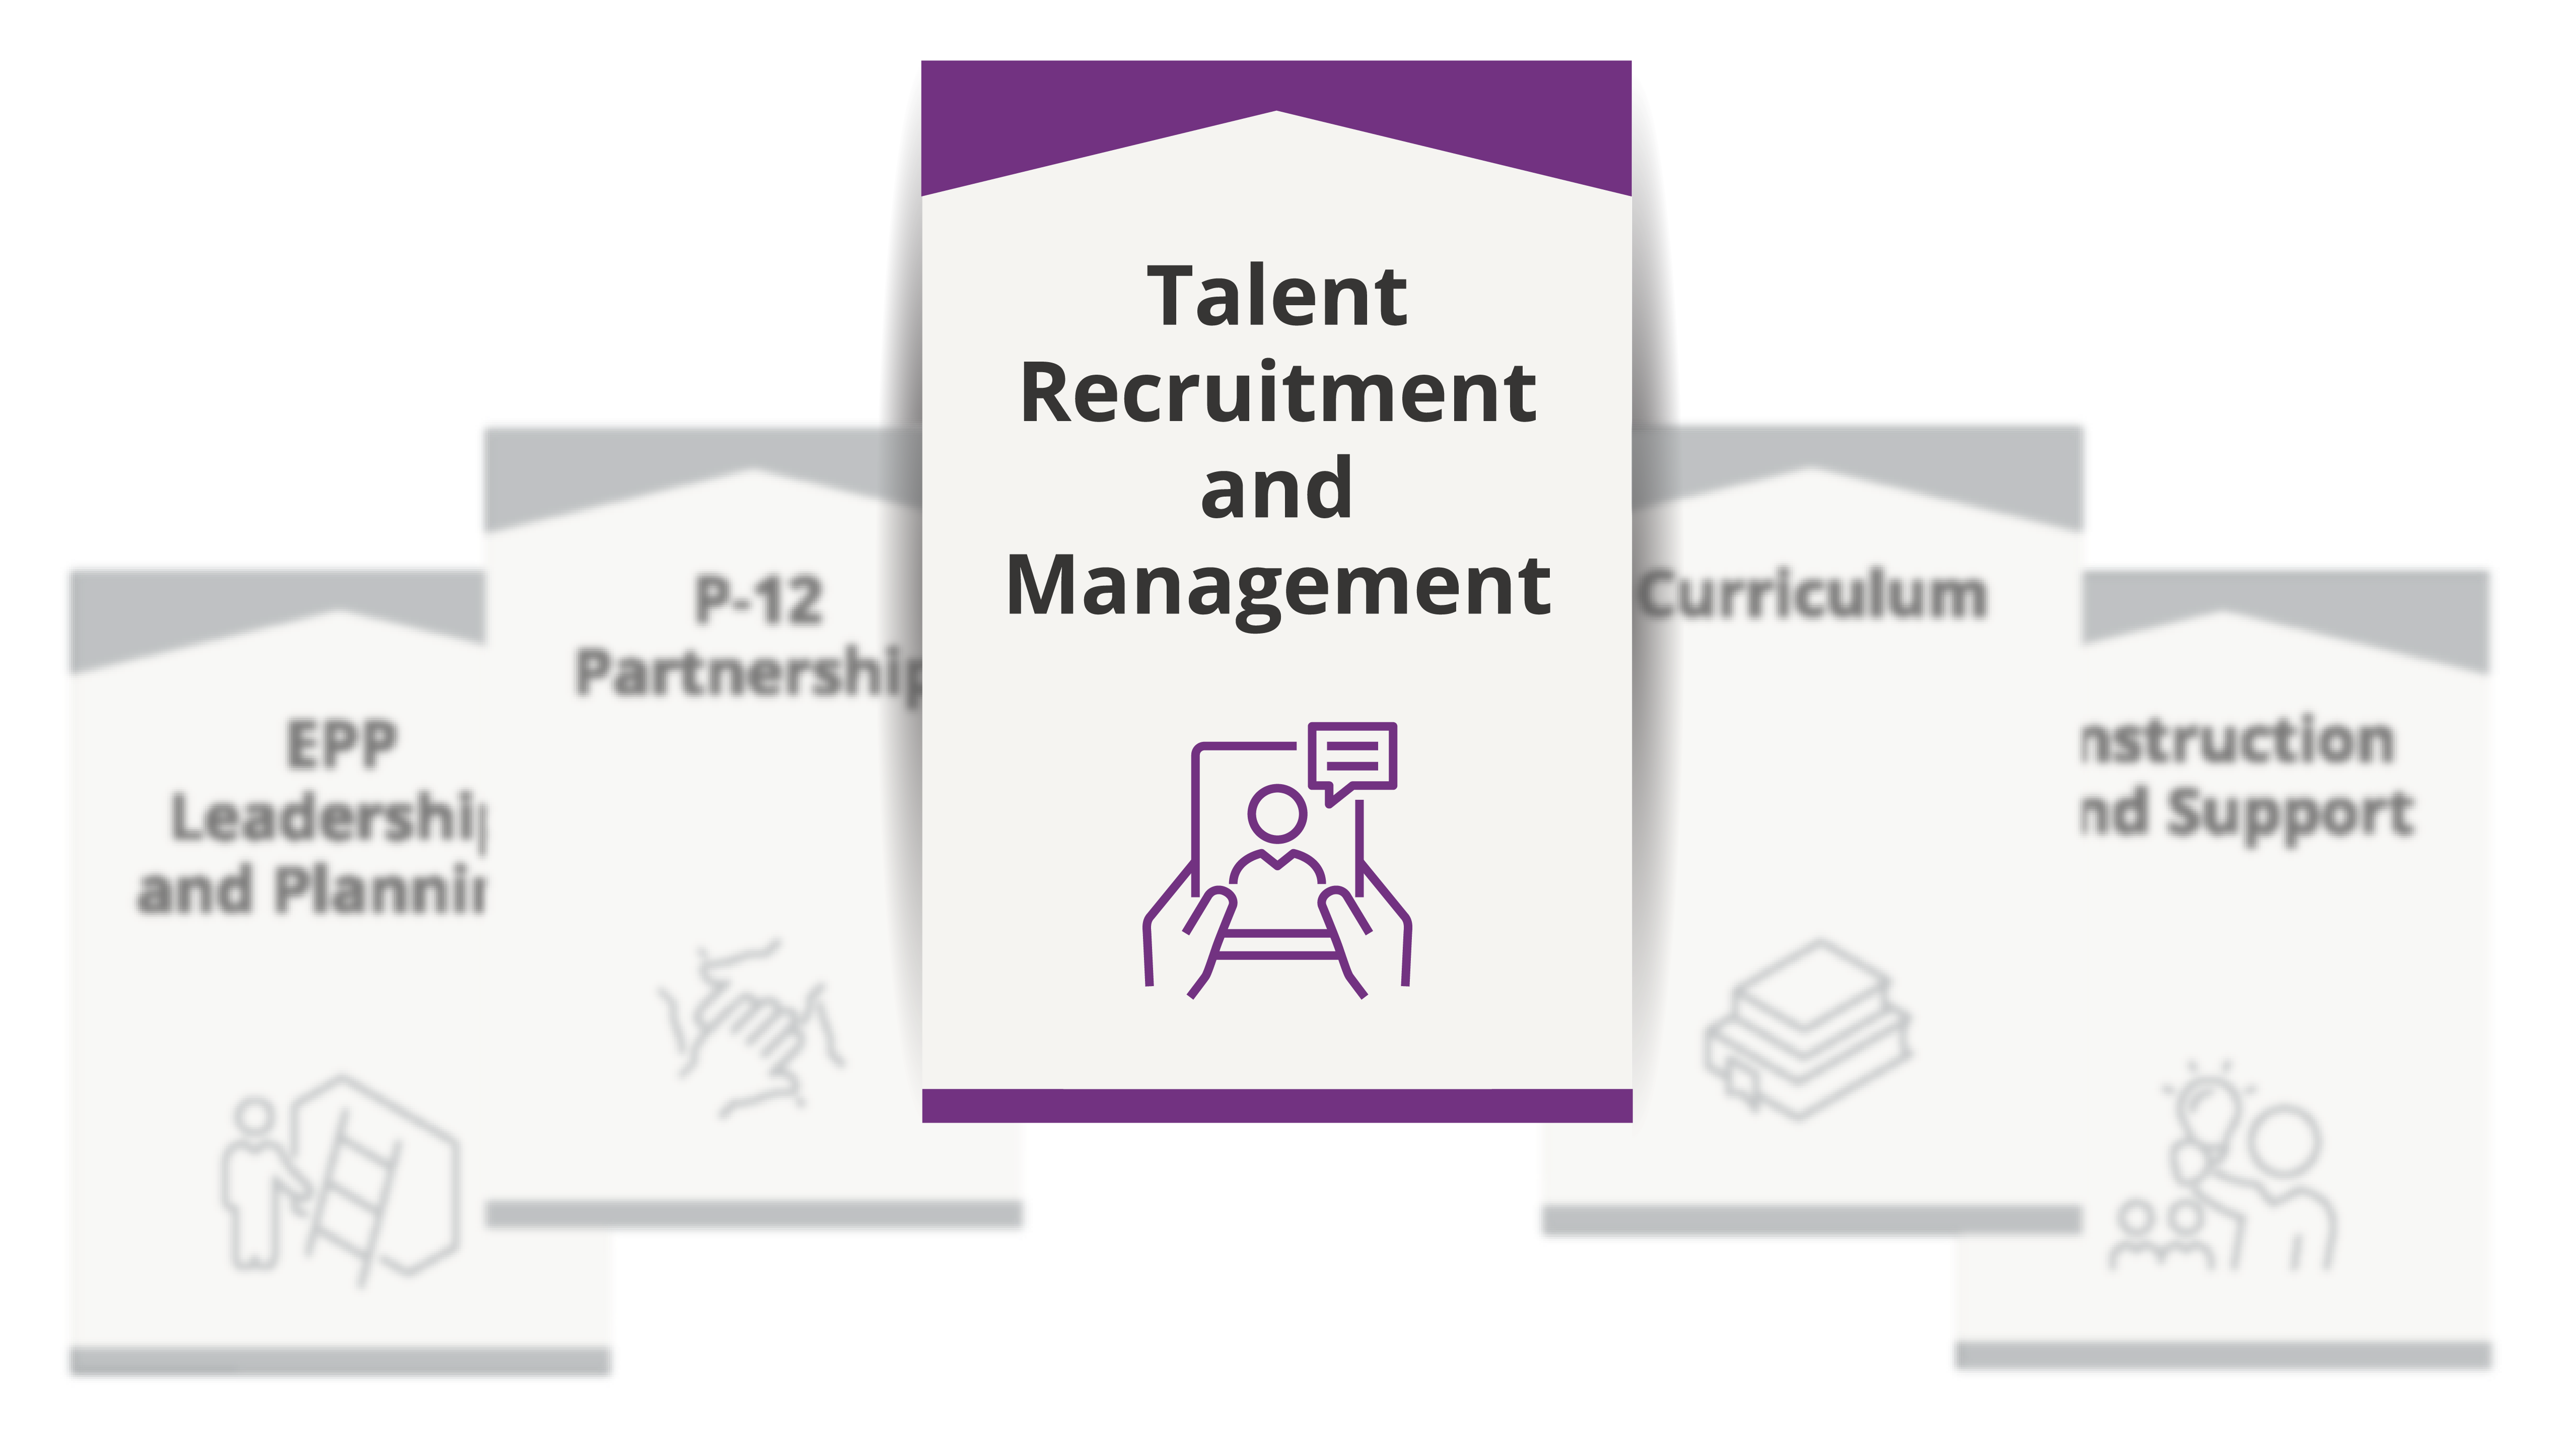 Talent Recruitment and Management